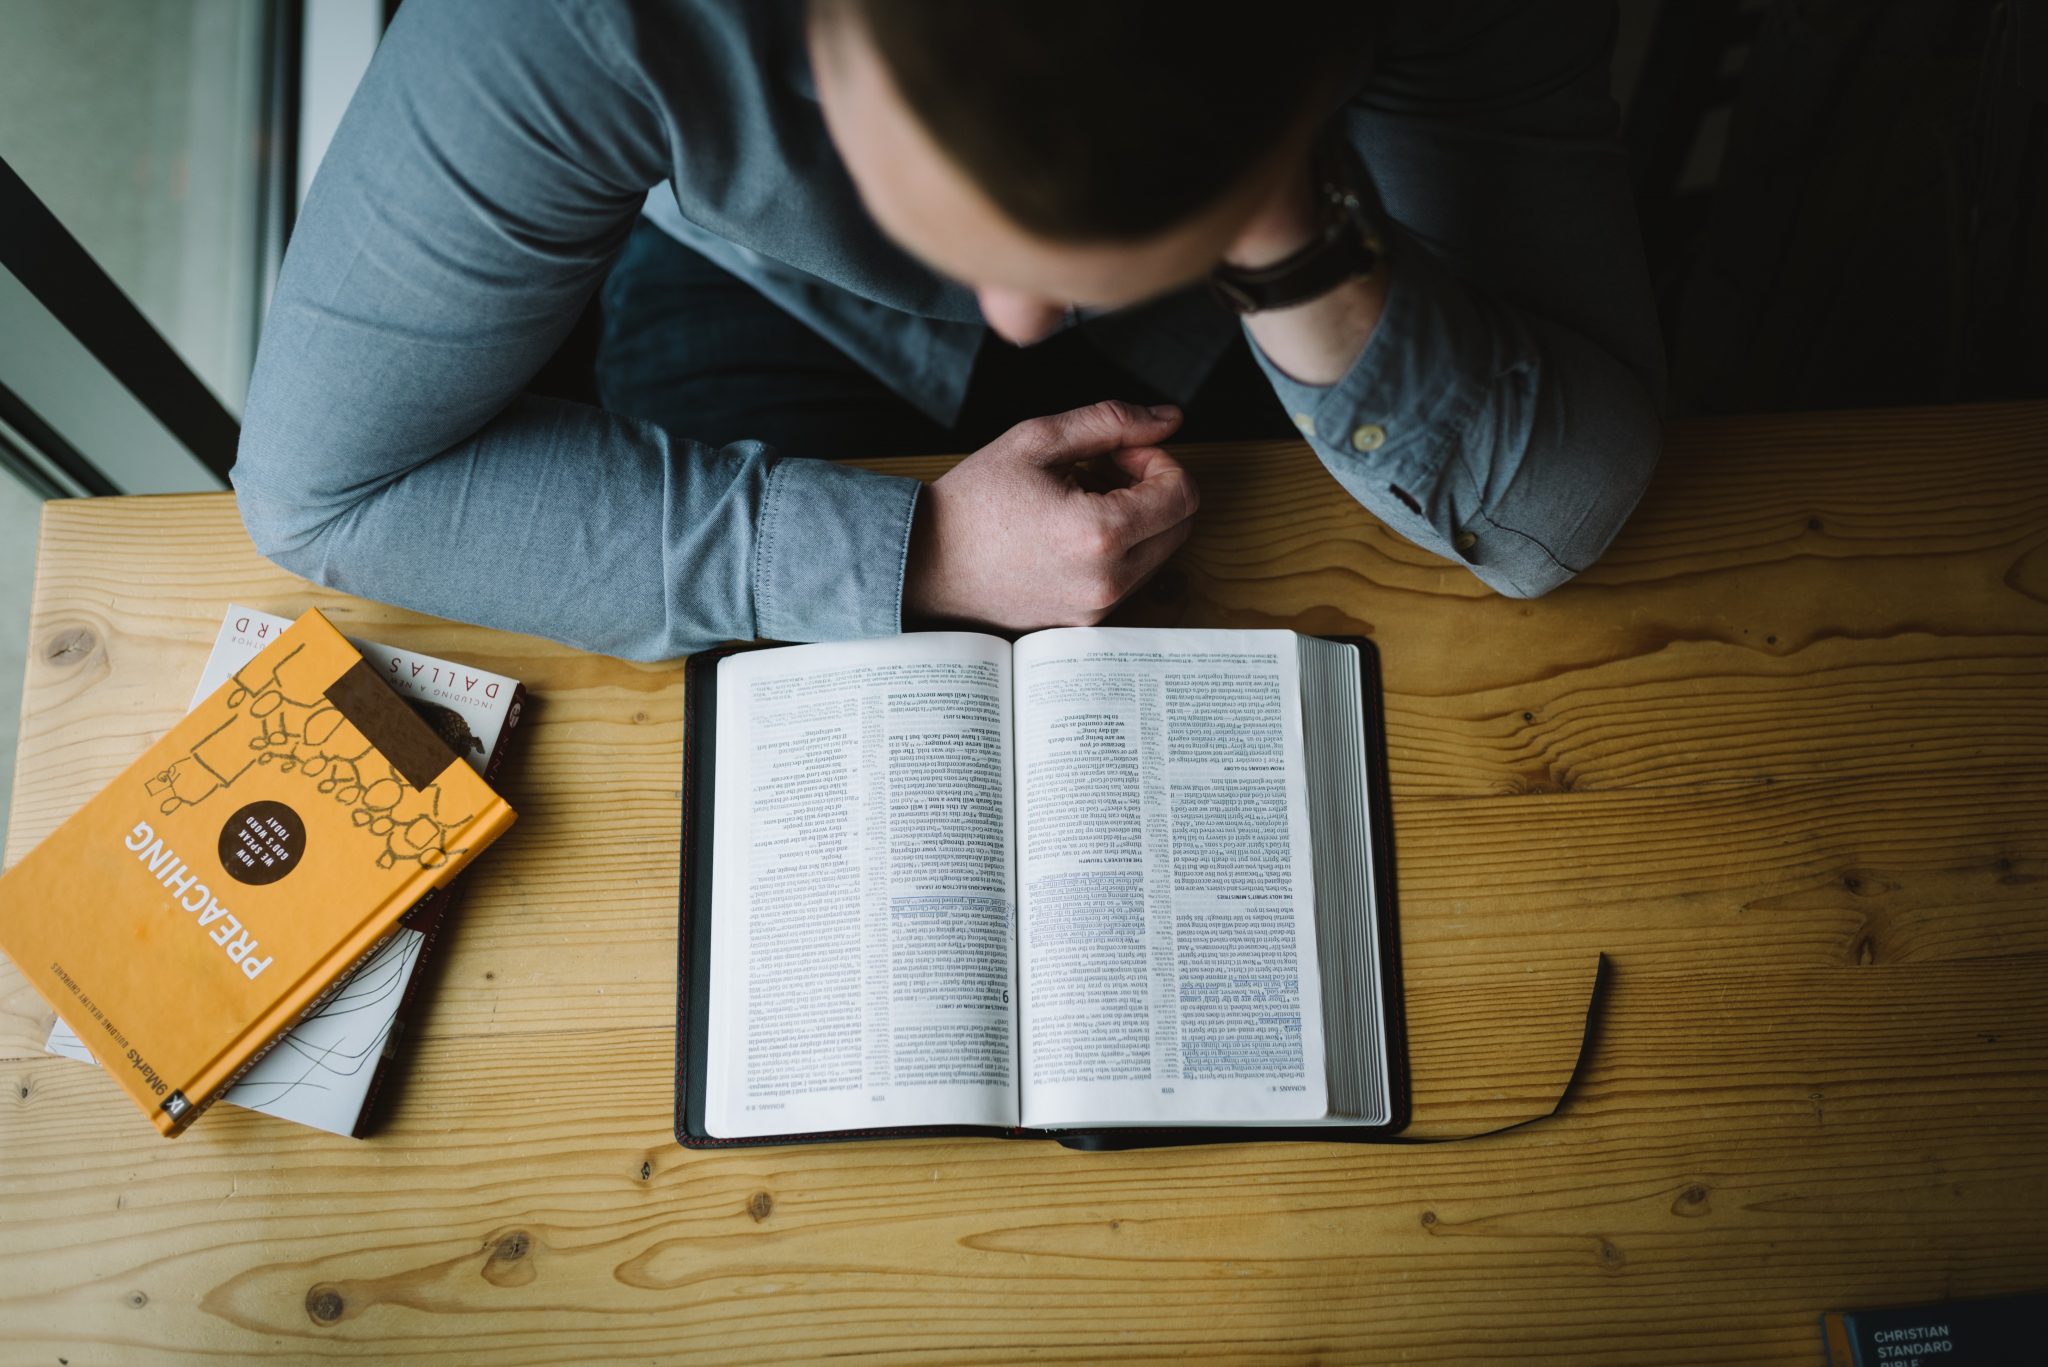 Preaching on Evangelism: Three Key New Testament Passages